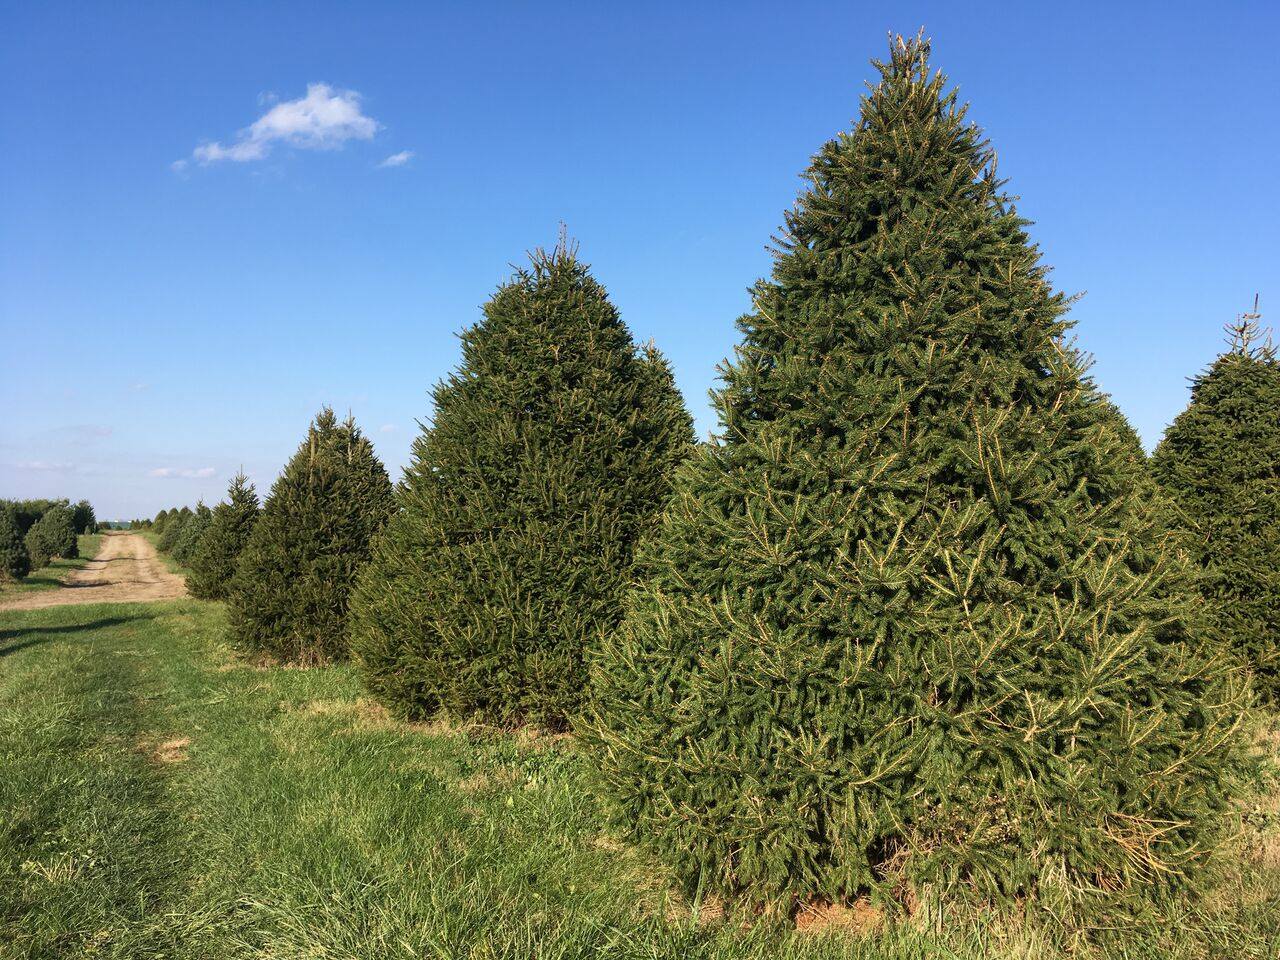 Piney Acres Farm Christmas Tree Farm, cut down your own christmas tree